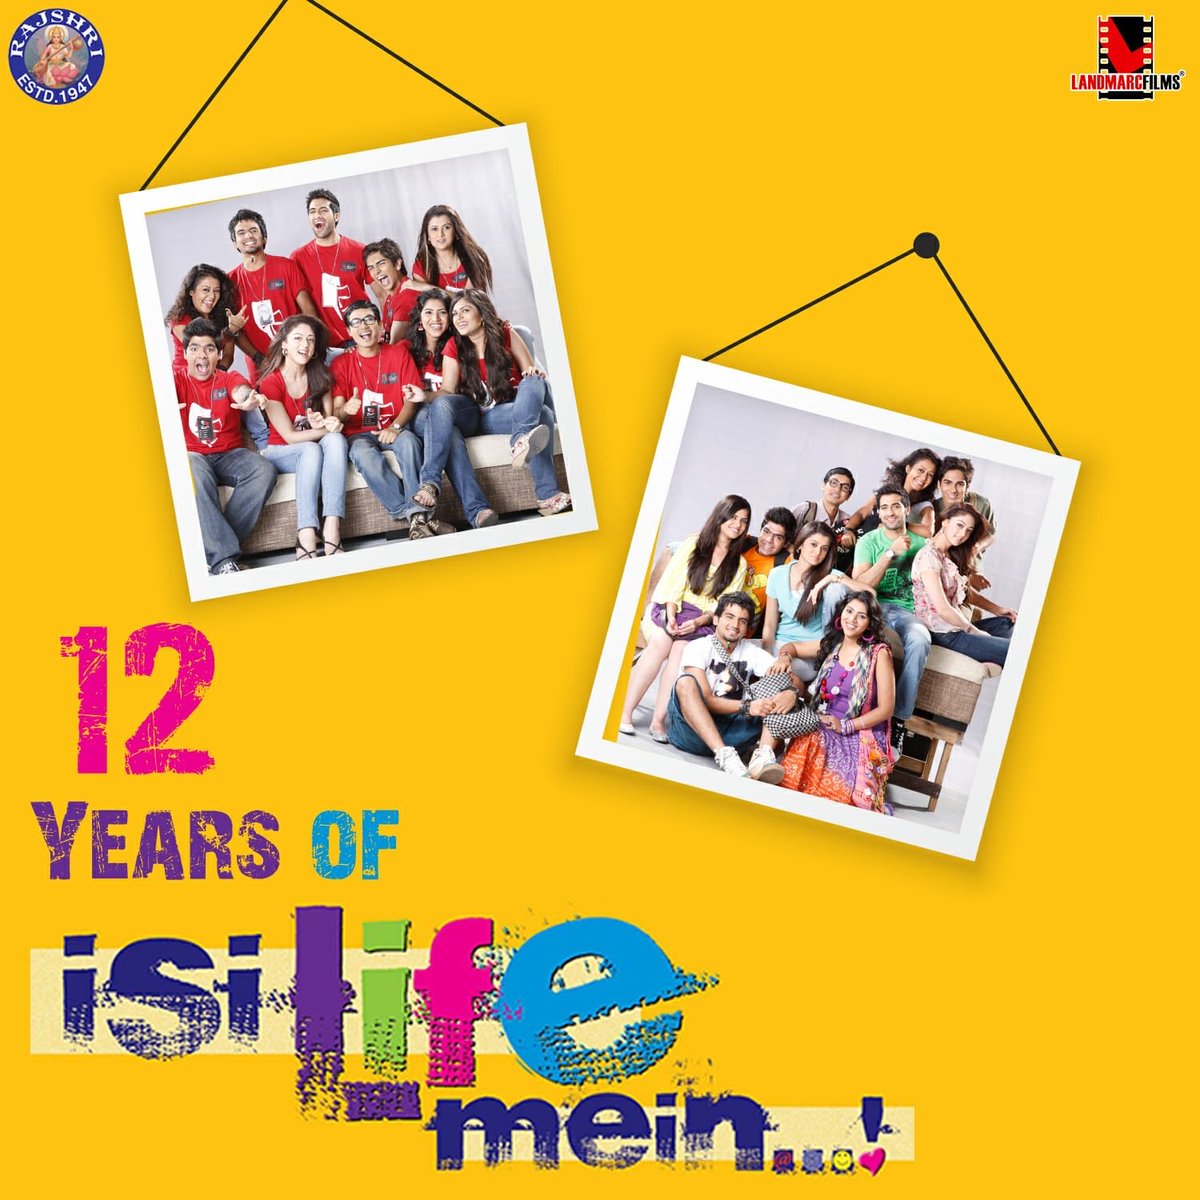 12 years of ISI LIFE MEIN my second movie thanks to my director Vidhi kasliwal ji, Sooraj Barjatya ji and entire team of Rajshree Production🙏🏻